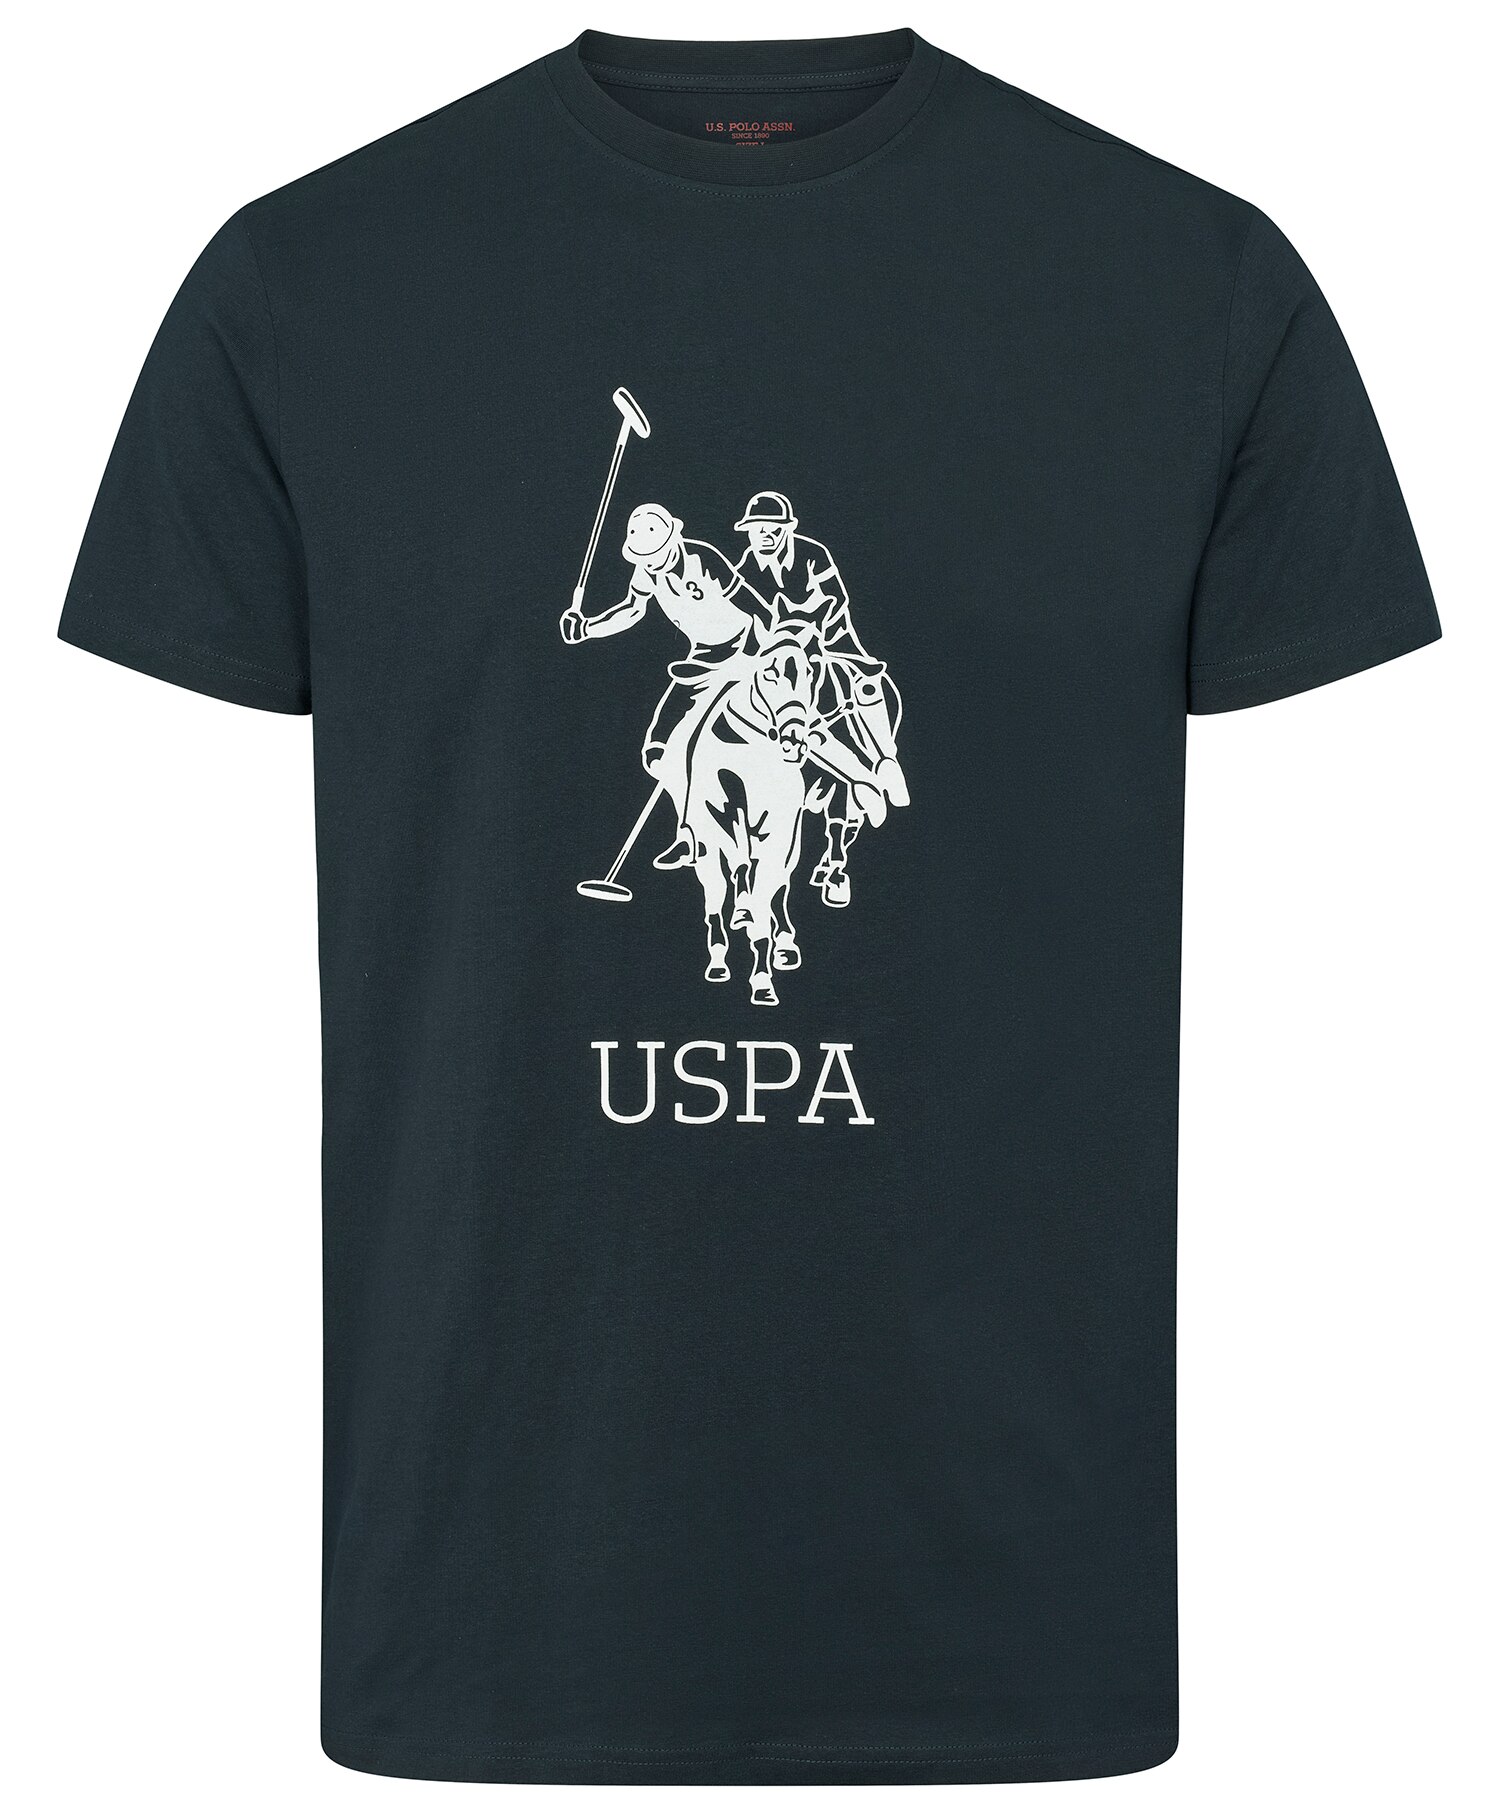 U.S Polo Frederik T-shirt